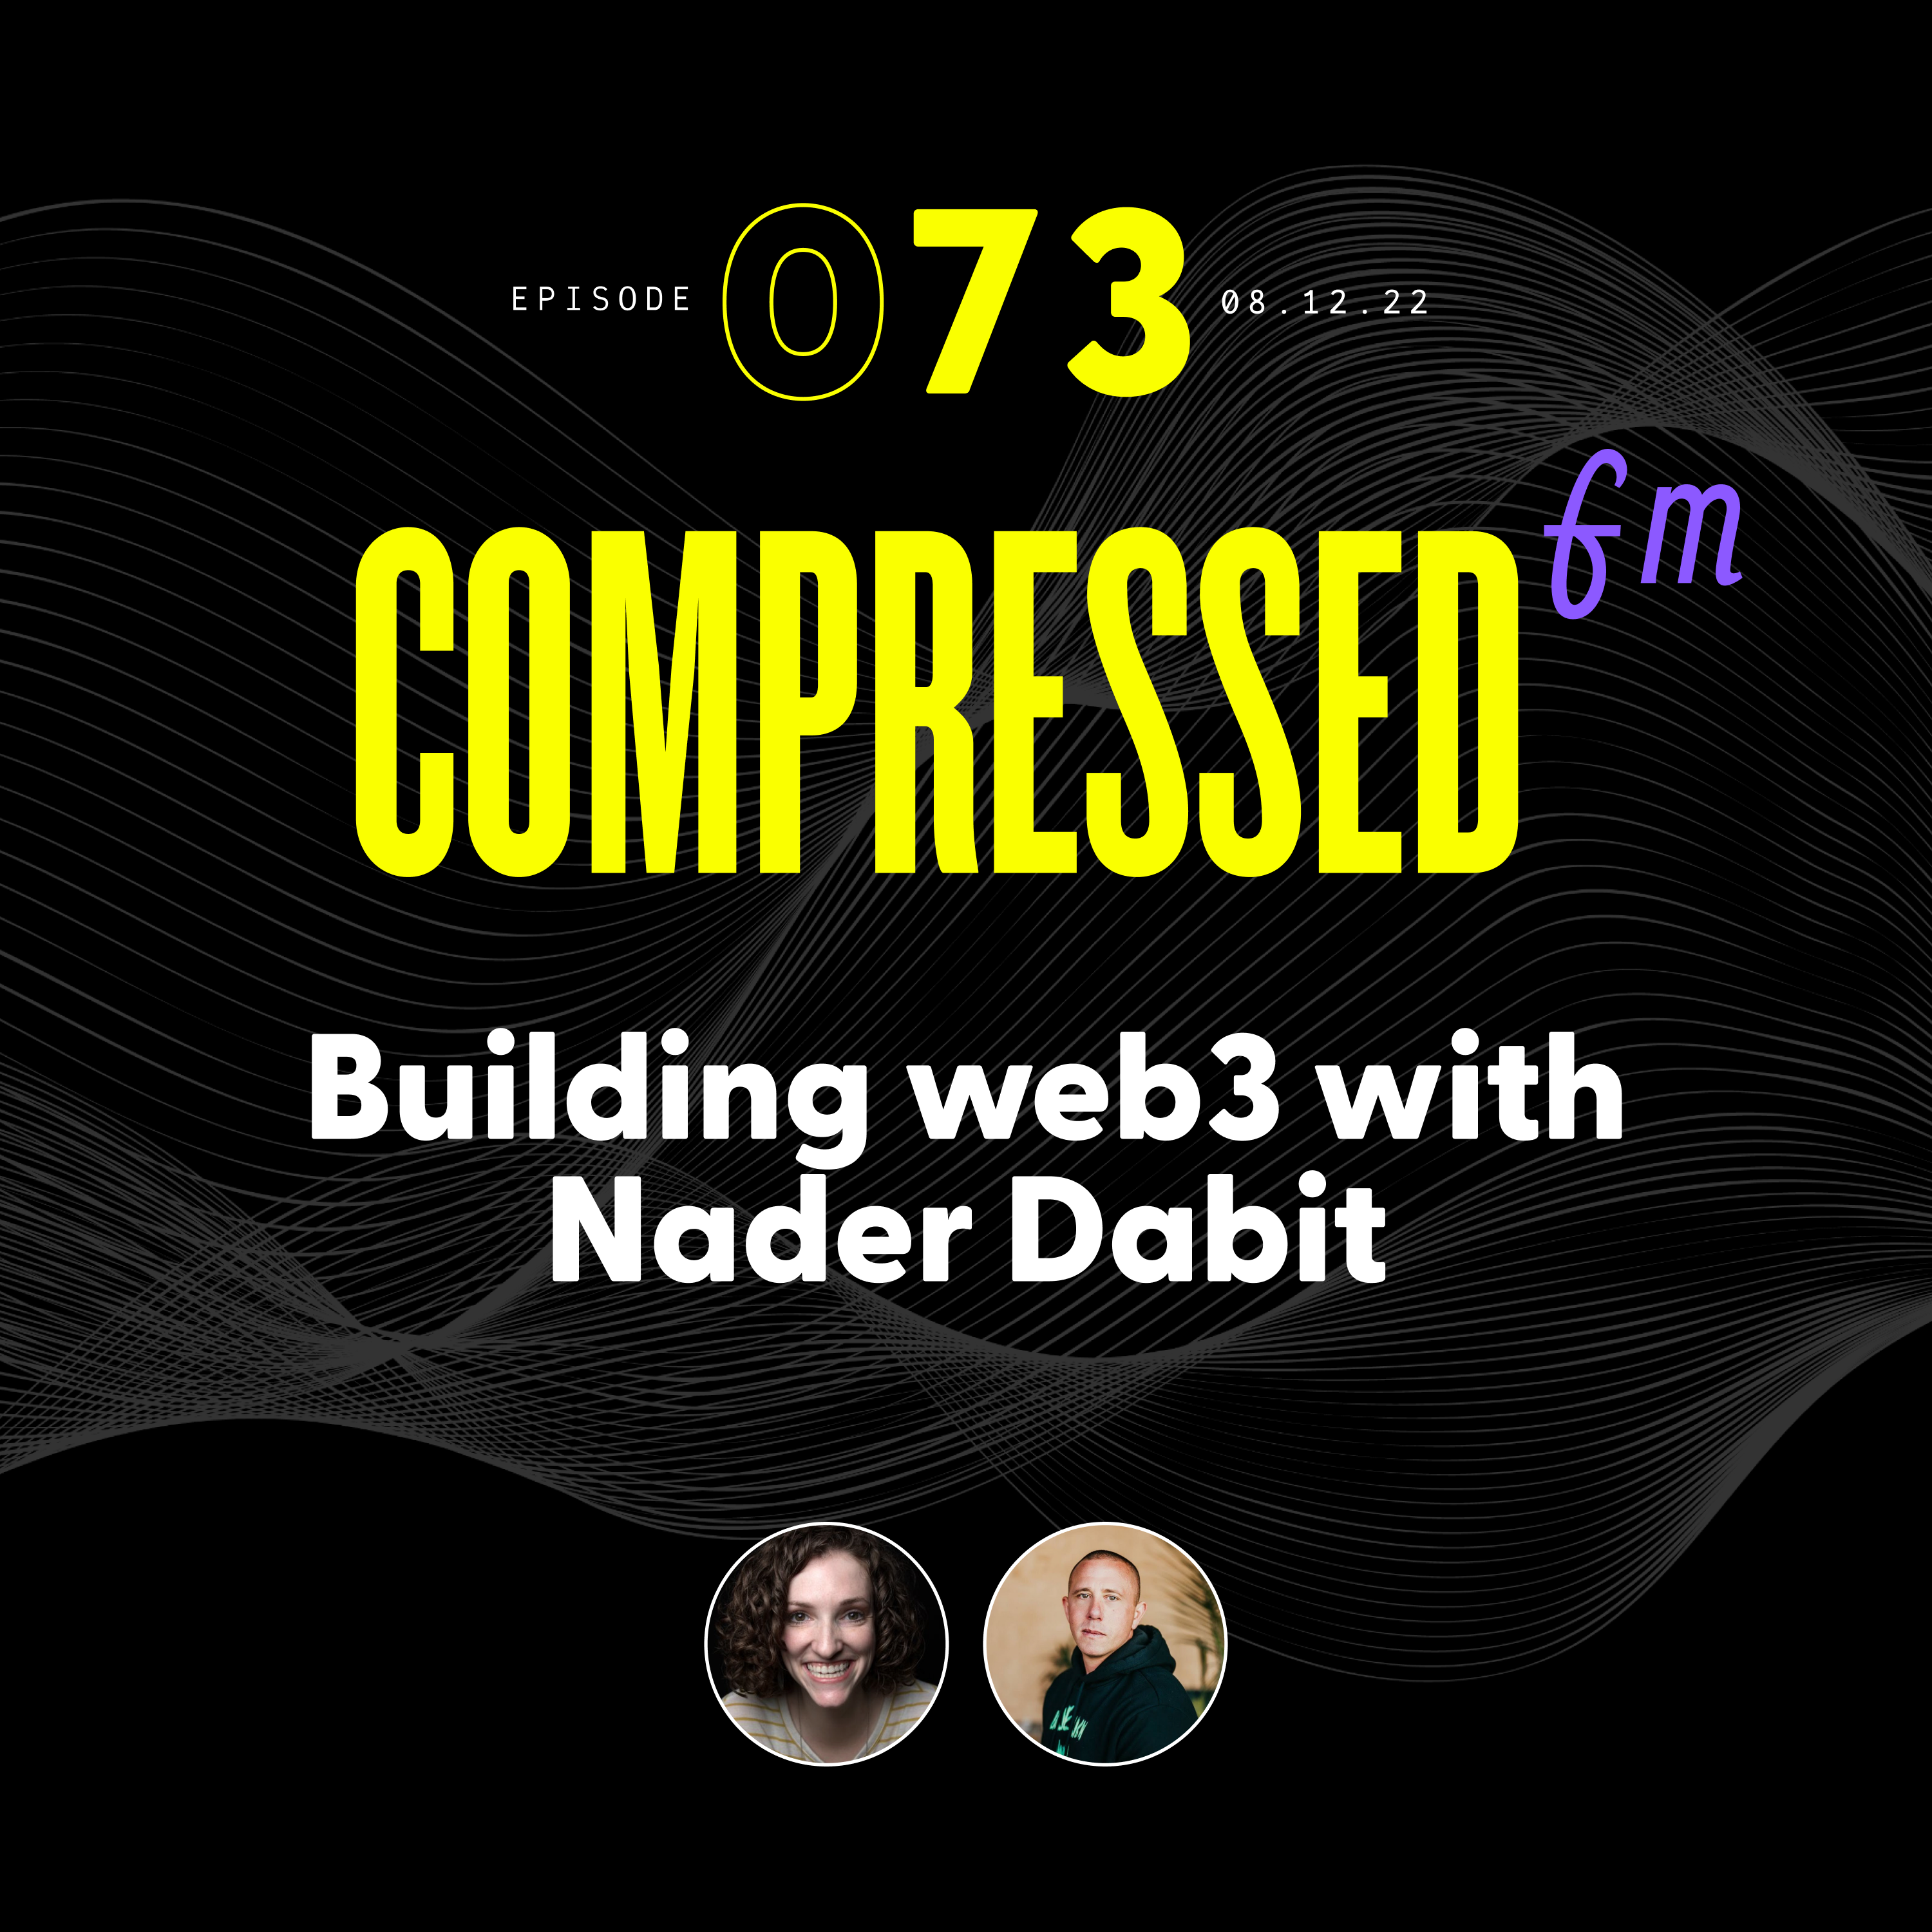 Building web3 with Nader Dabit